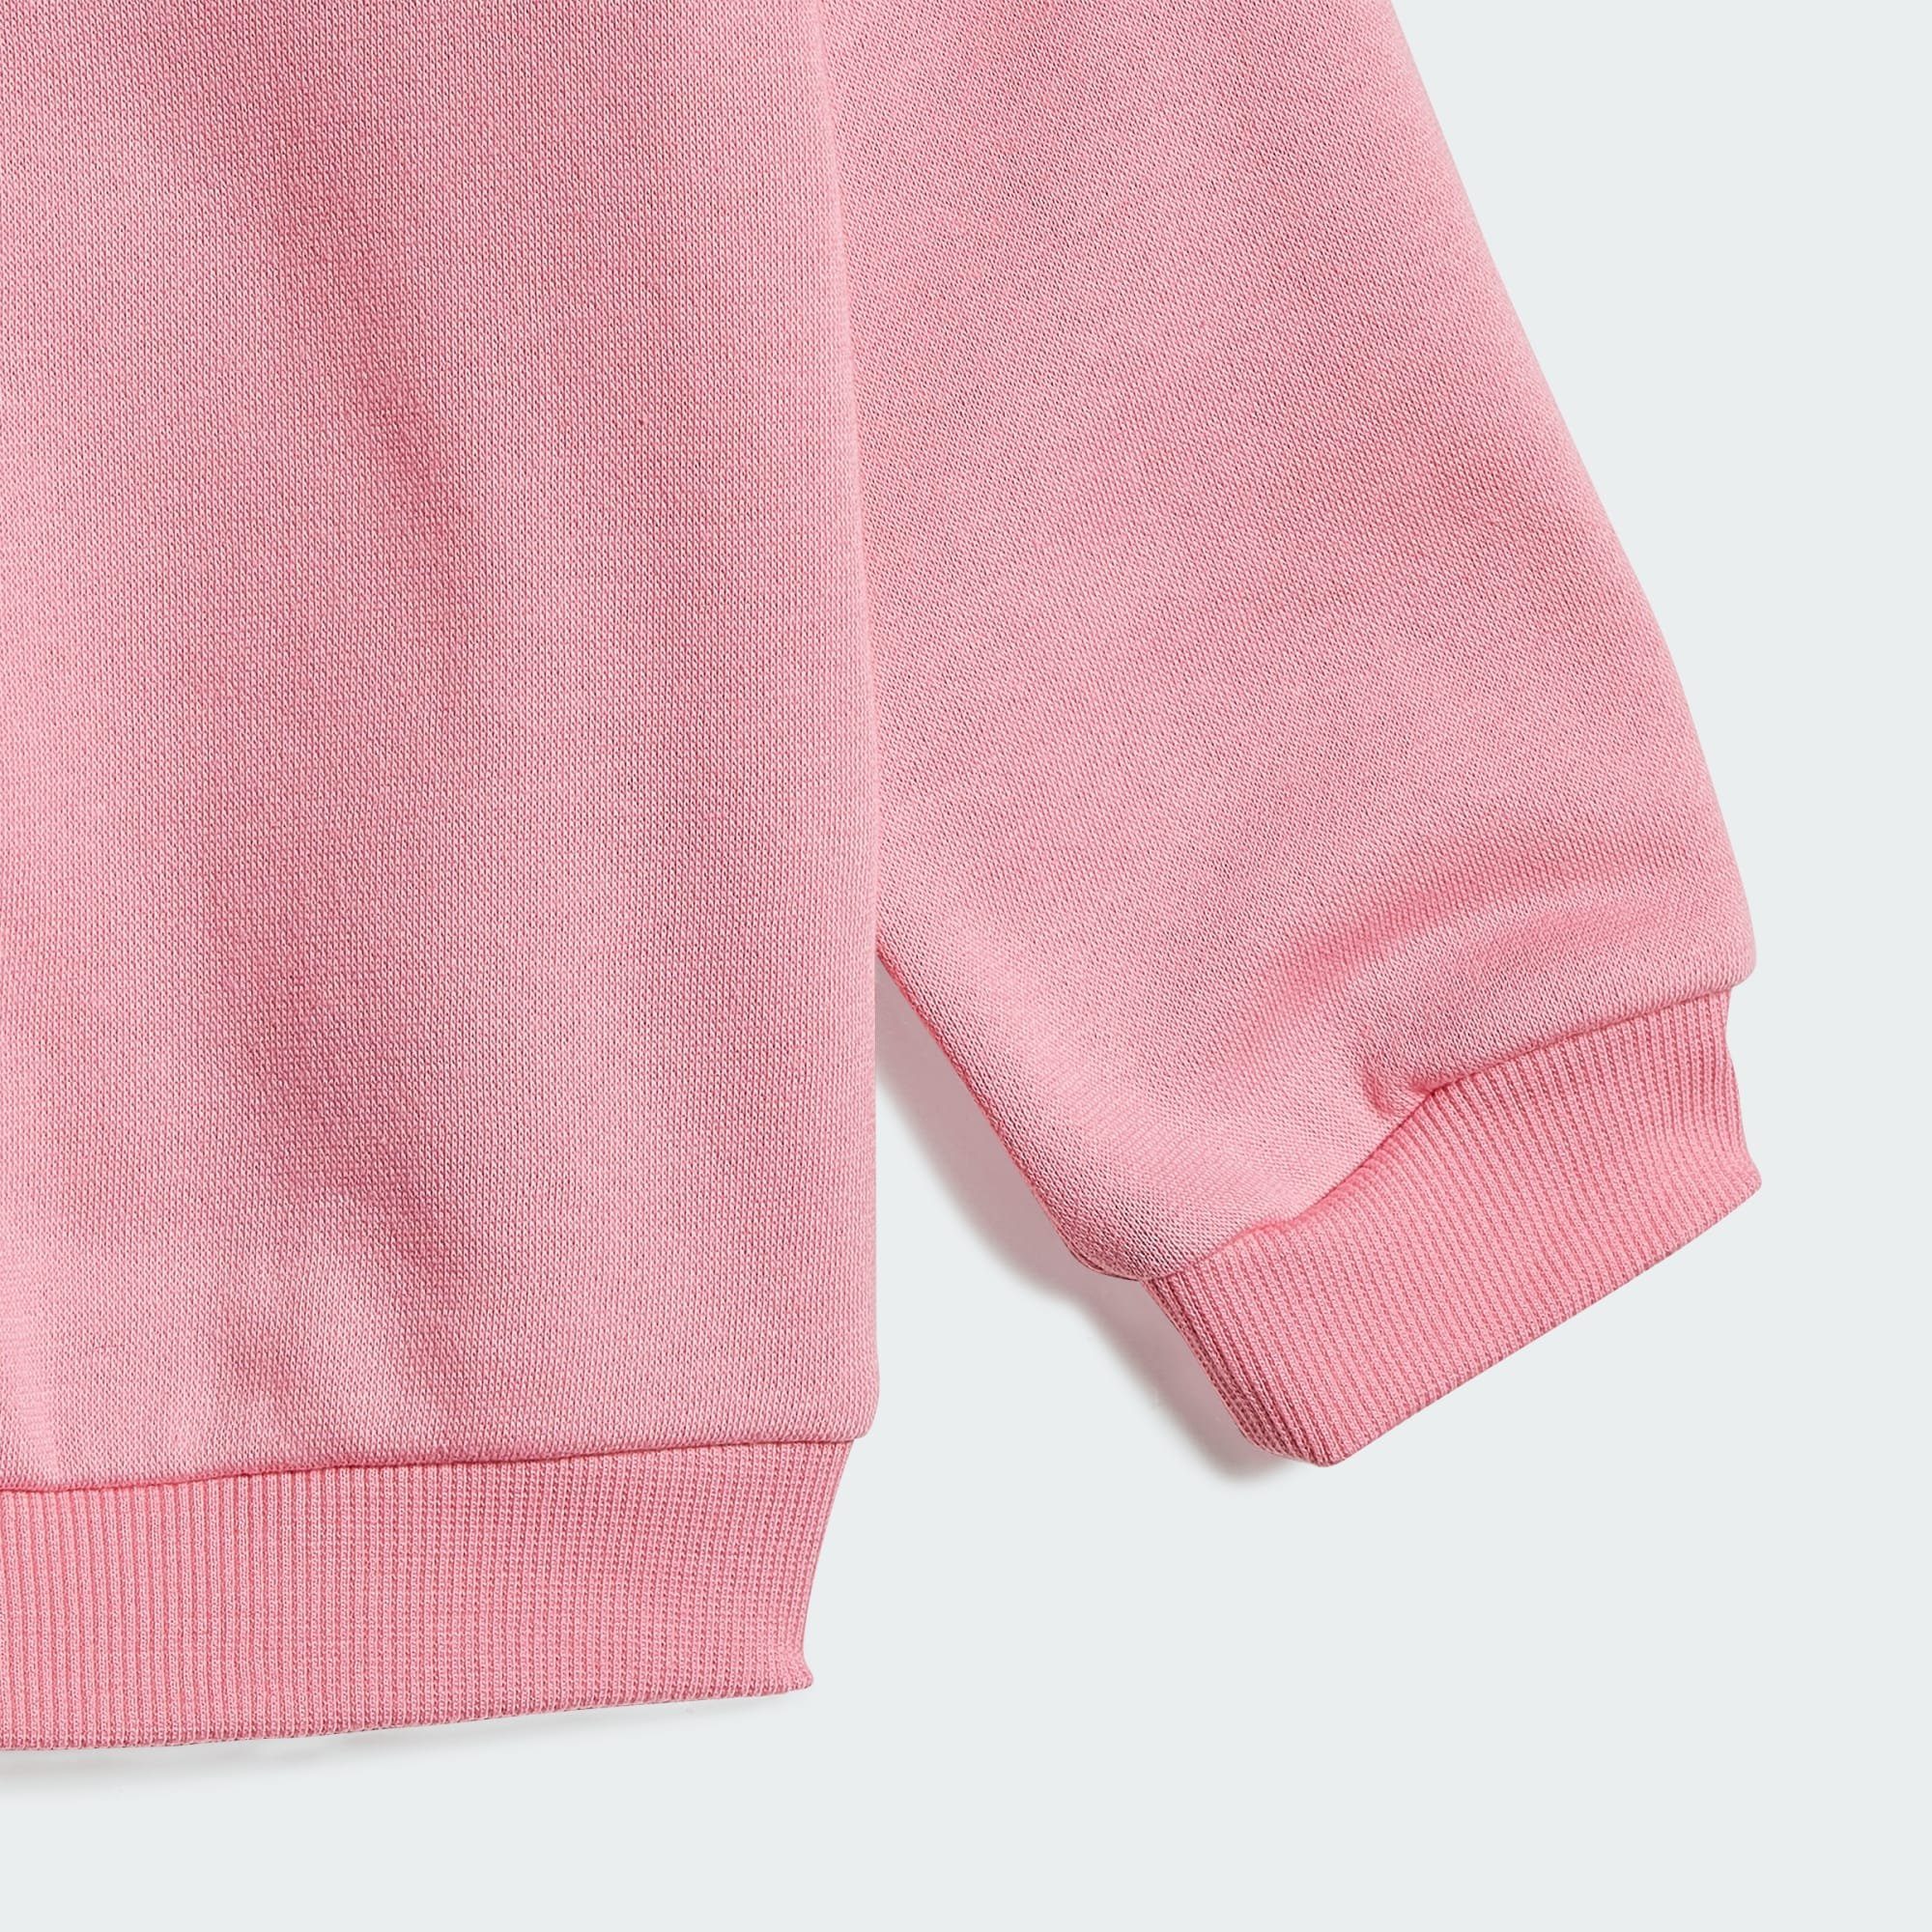 White OF SPORT adidas Pink BADGE / Bliss Trainingsanzug Sportswear JOGGINGANZUG